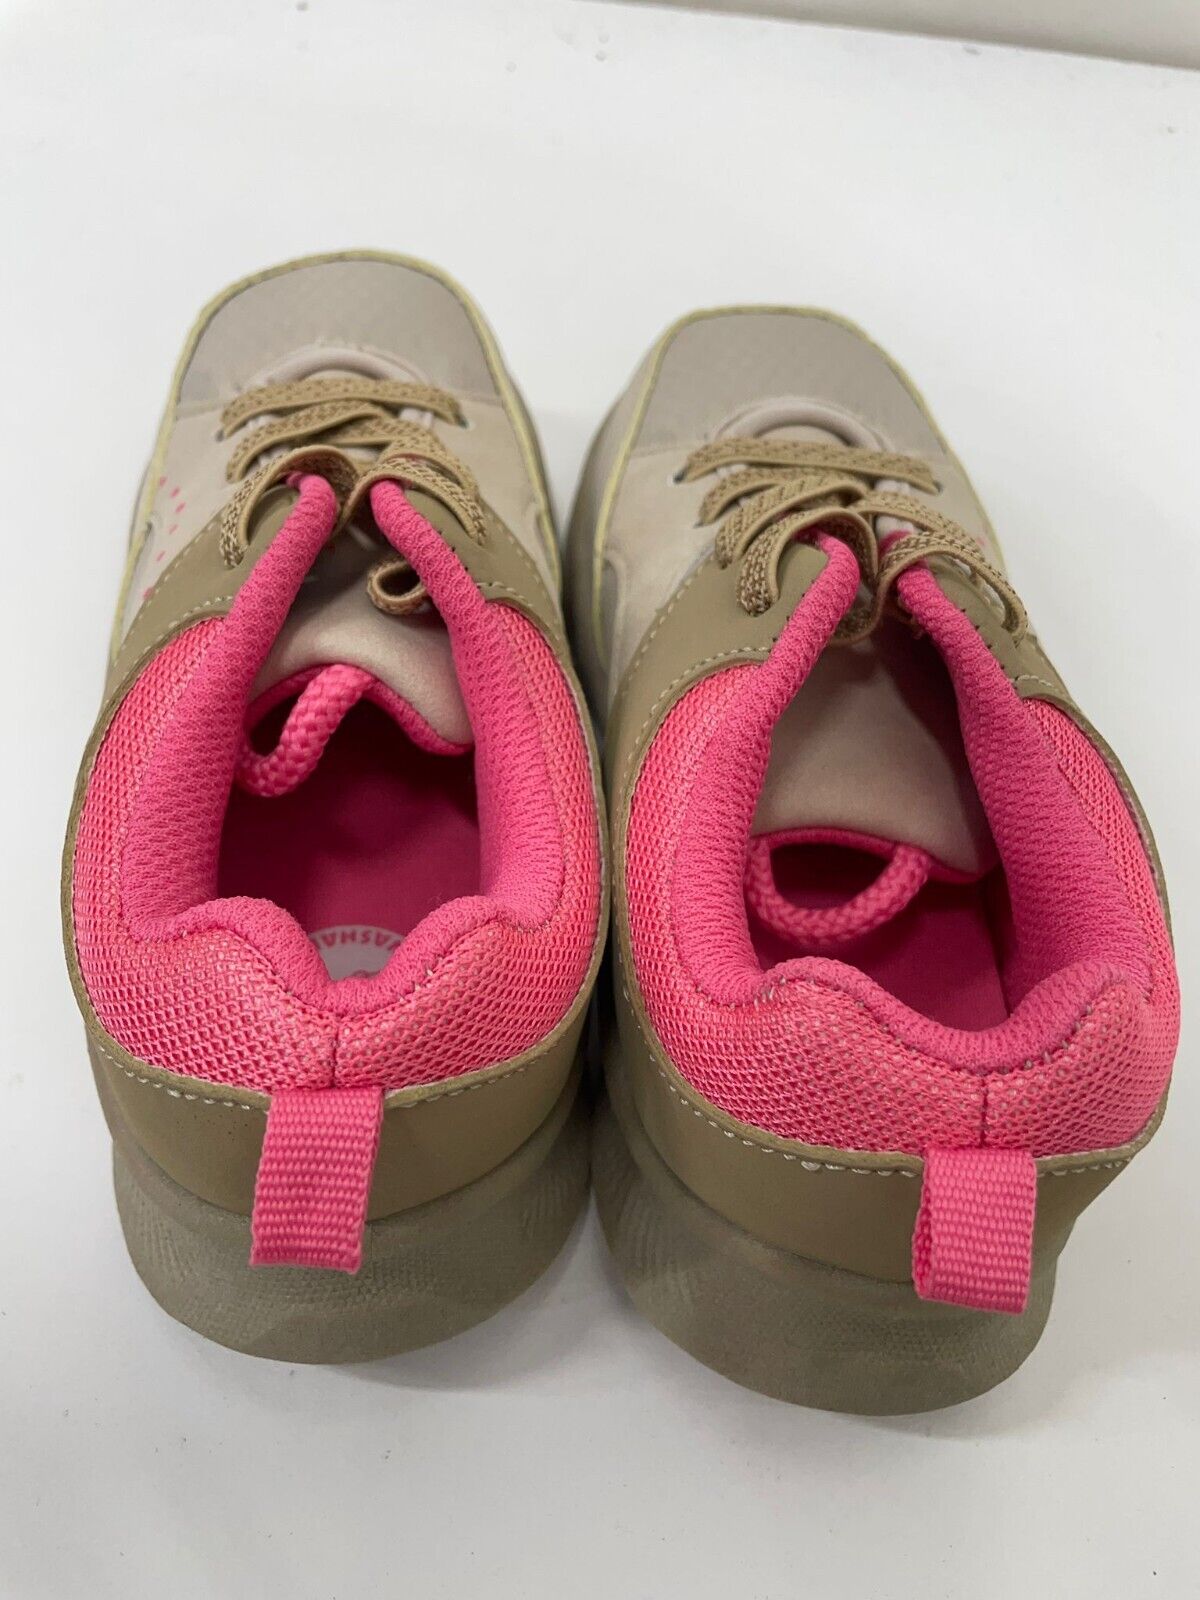 Oshkosh B'gosh Girls Youth Kids 11M Fable Shoes Sneakers Beige Pink